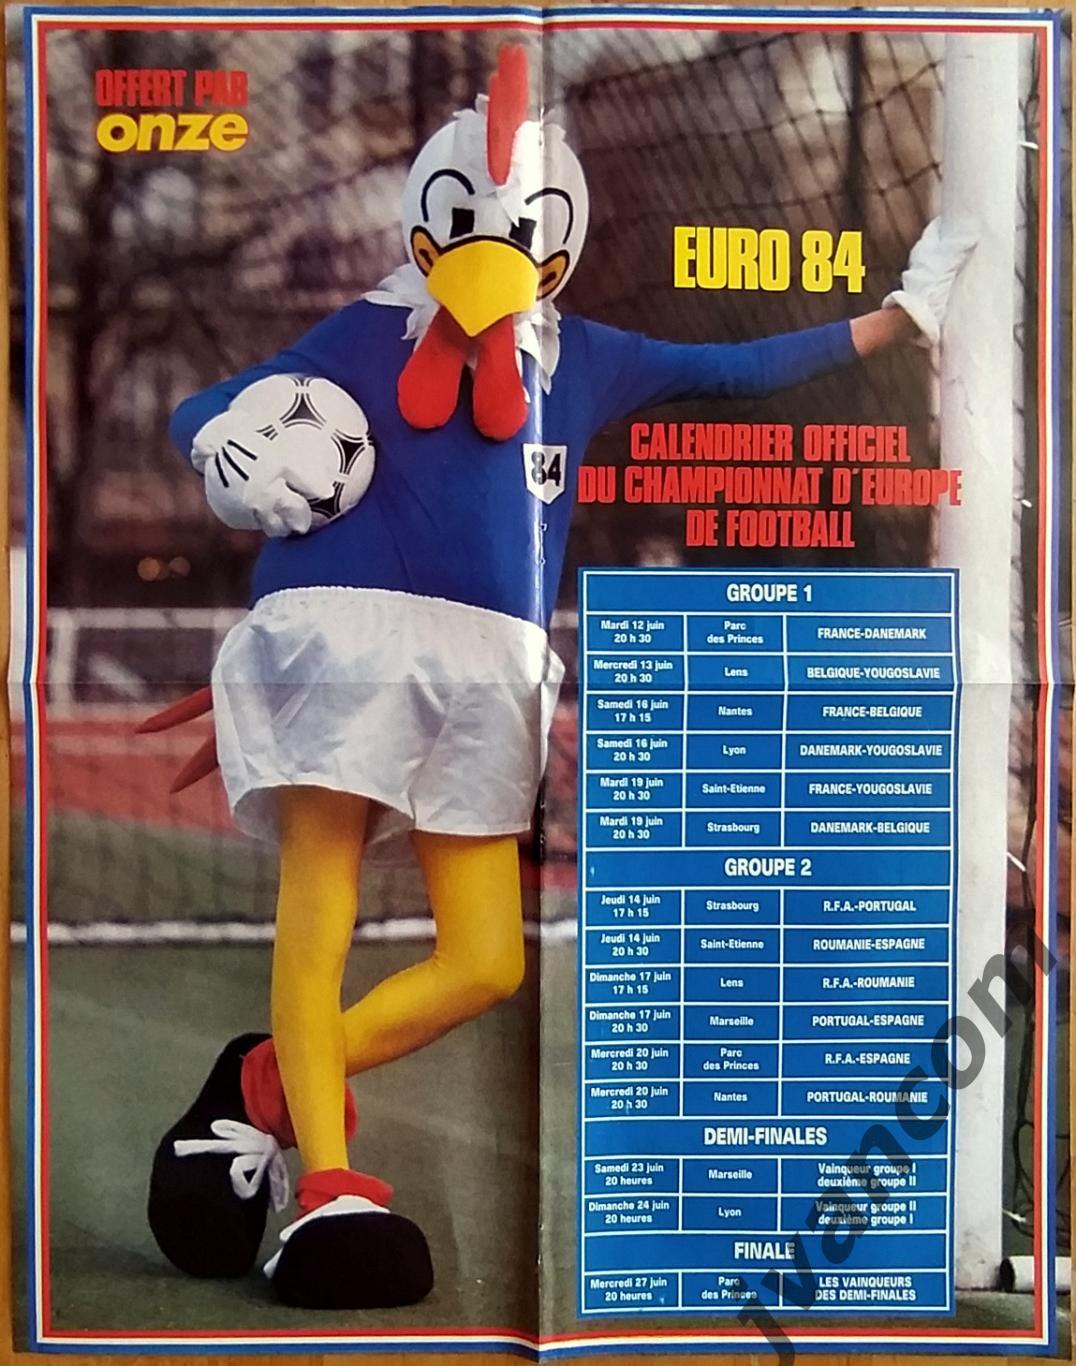 Журнал ONZE / ОНЗЕ №98 за 1984 год. Жеребьевка Чемпионат Европы по футболу. 5